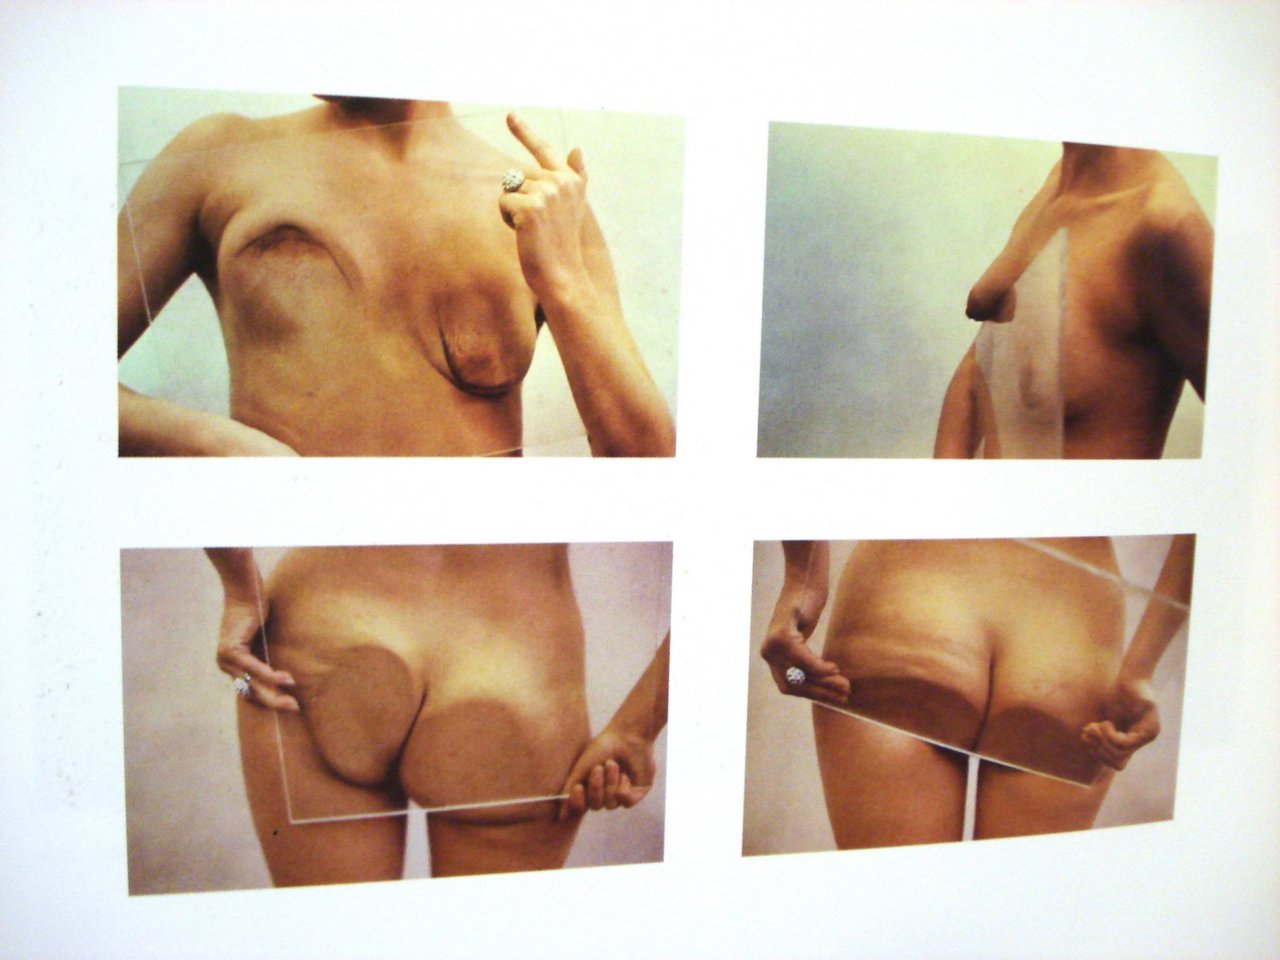 Ana Mendieta (1948-1985), Cuban American performance artist, sculptor, painter and